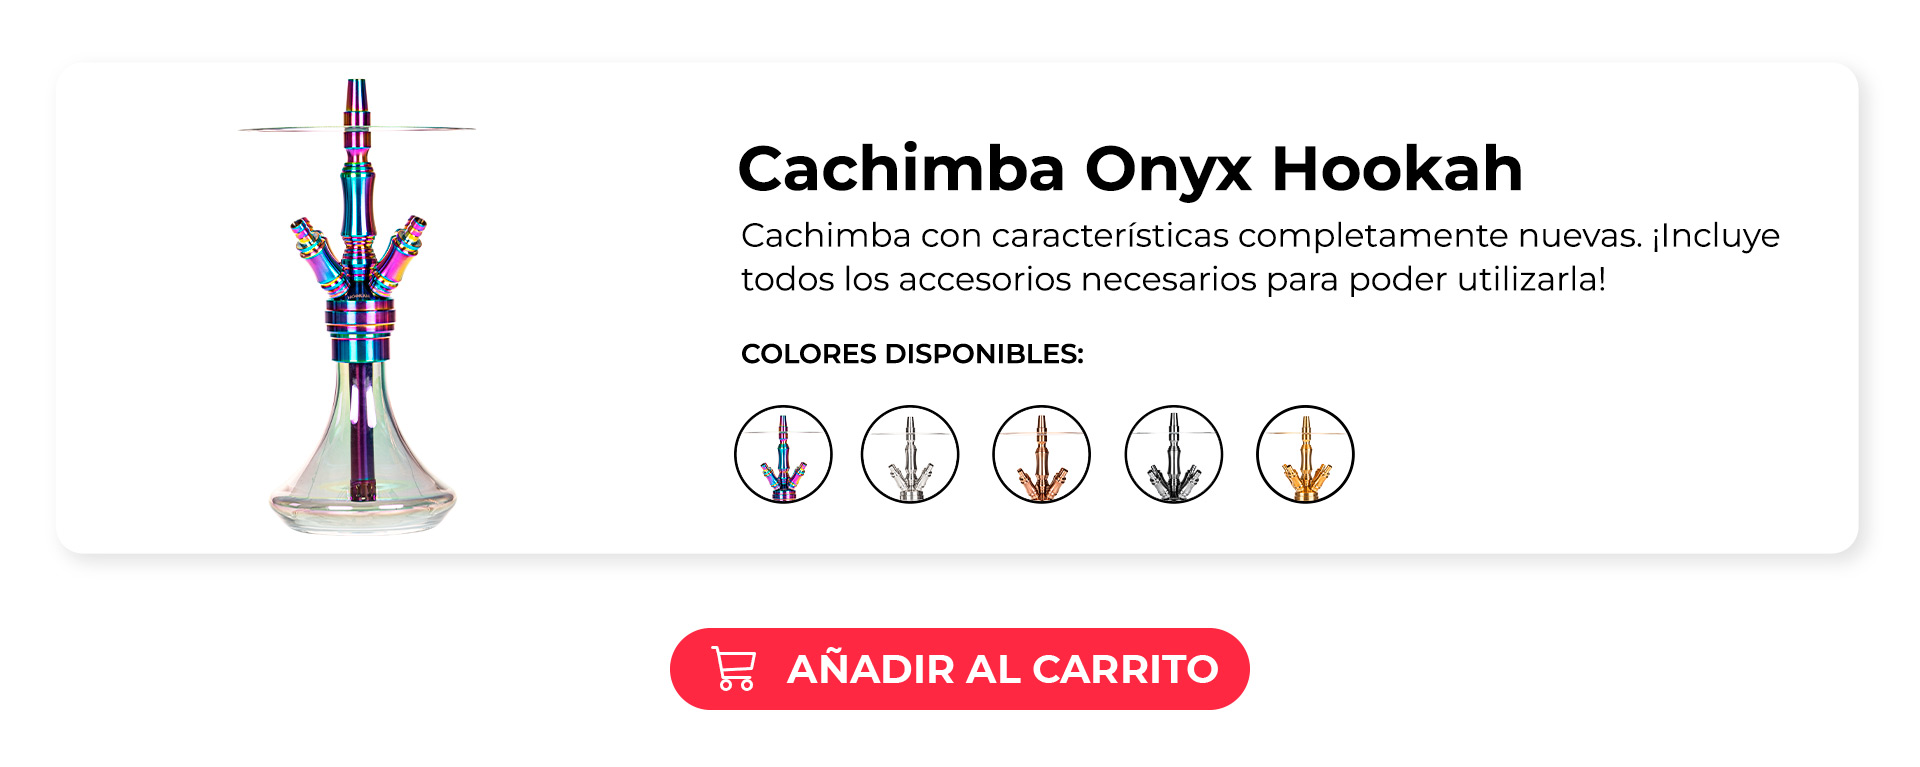 Cachimba Onyx Hookah